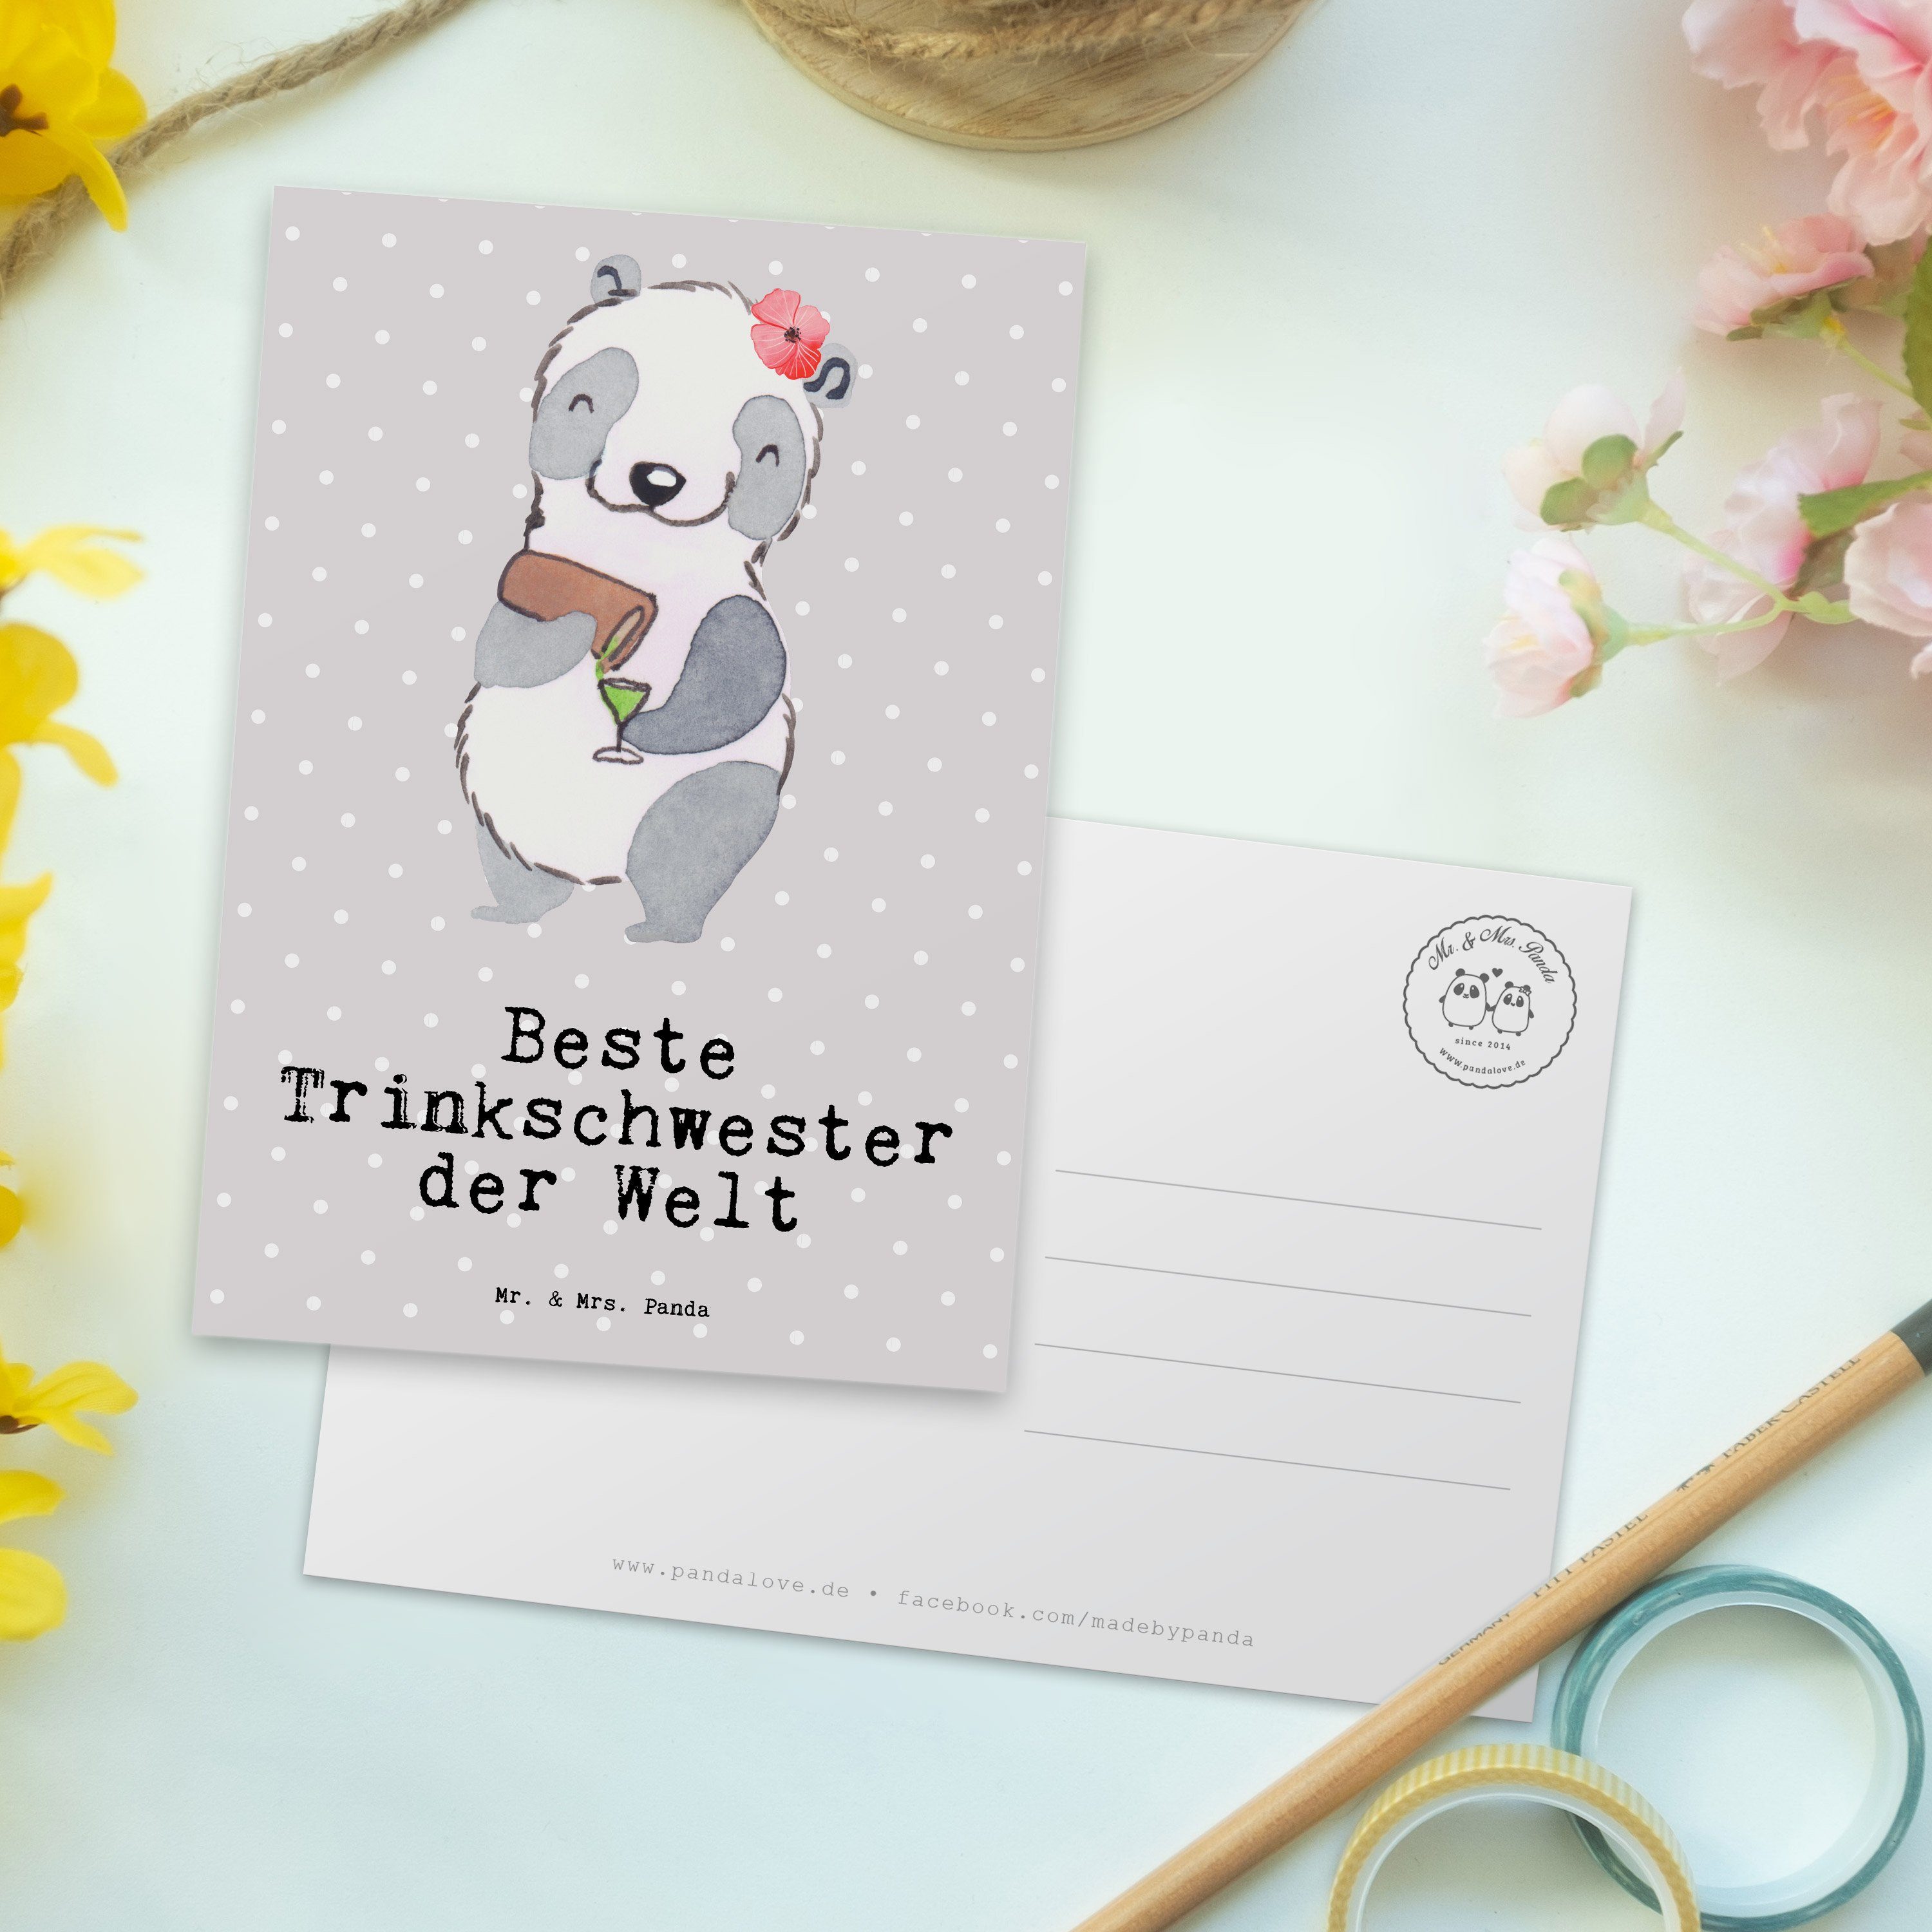 Panda Welt & - Pastell Beste Grau Grußka Geschenk, der Mr. Panda Postkarte Mrs. - Trinkschwester